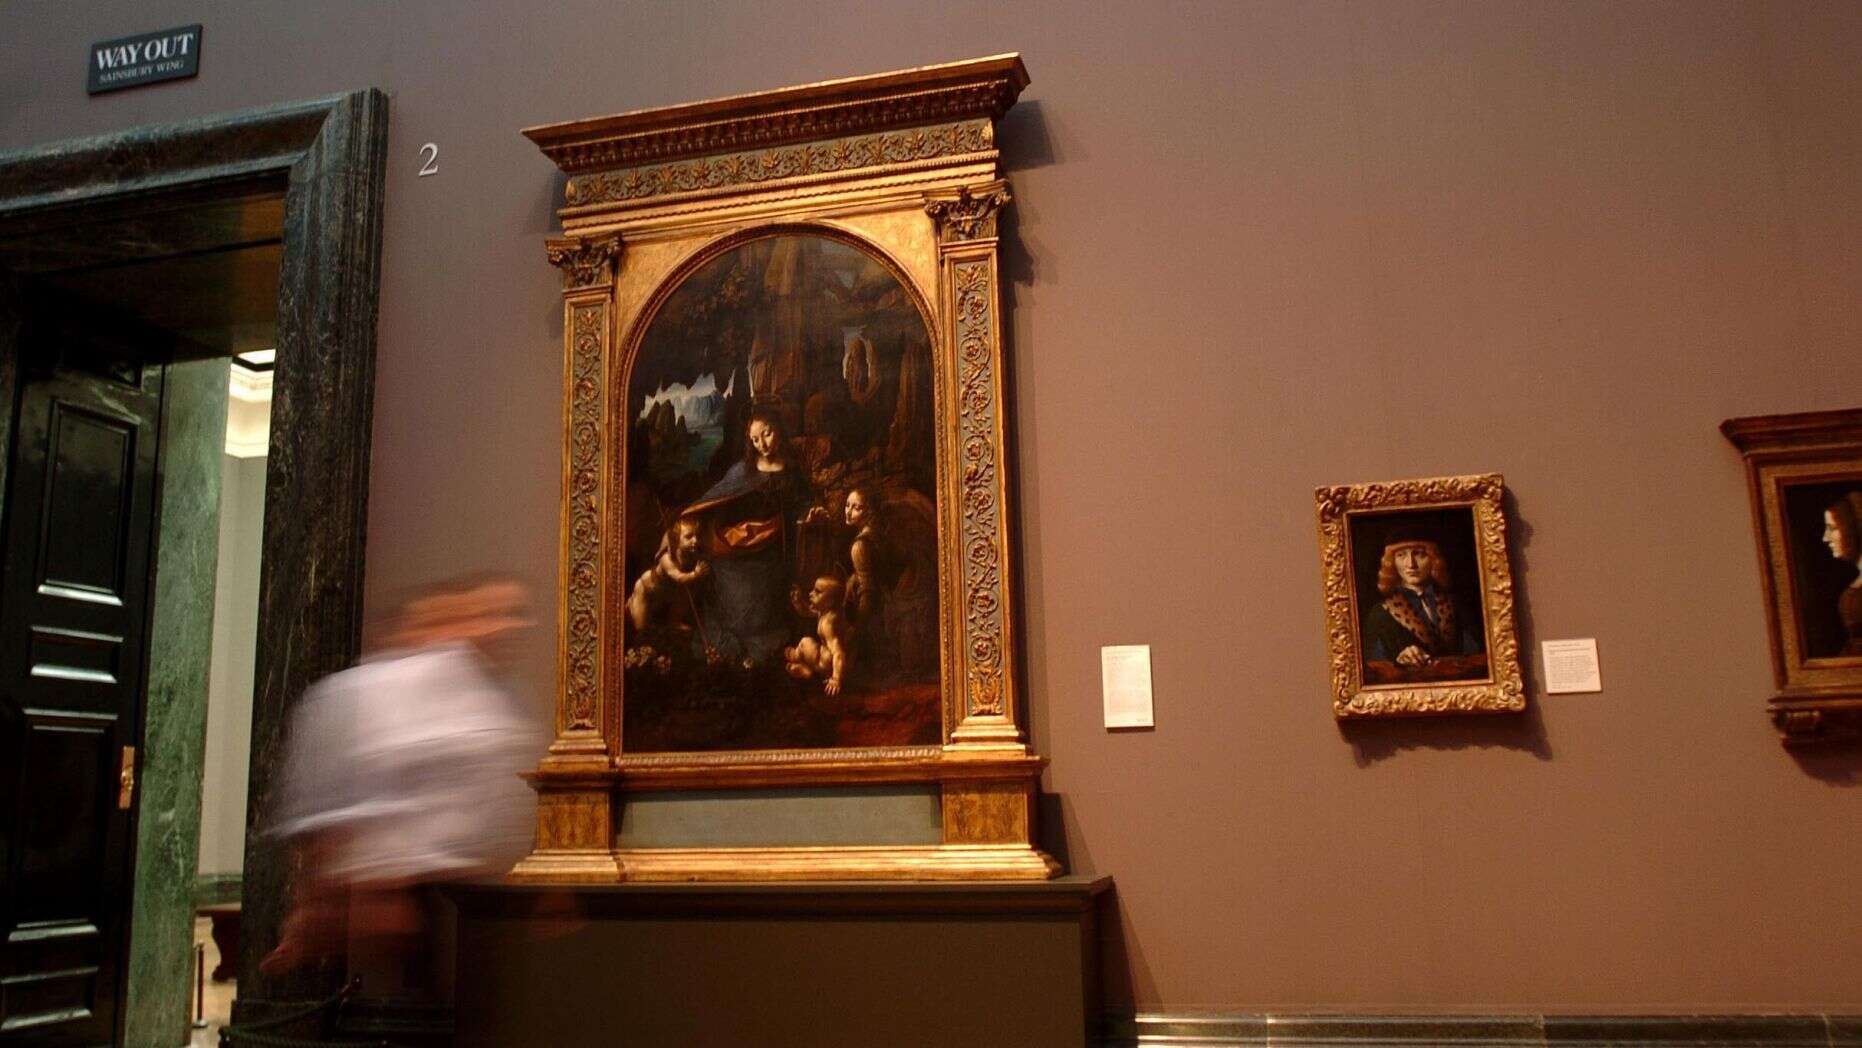 Revelaciones en pintura de Da Vinci: misteriosas figuras ocultas